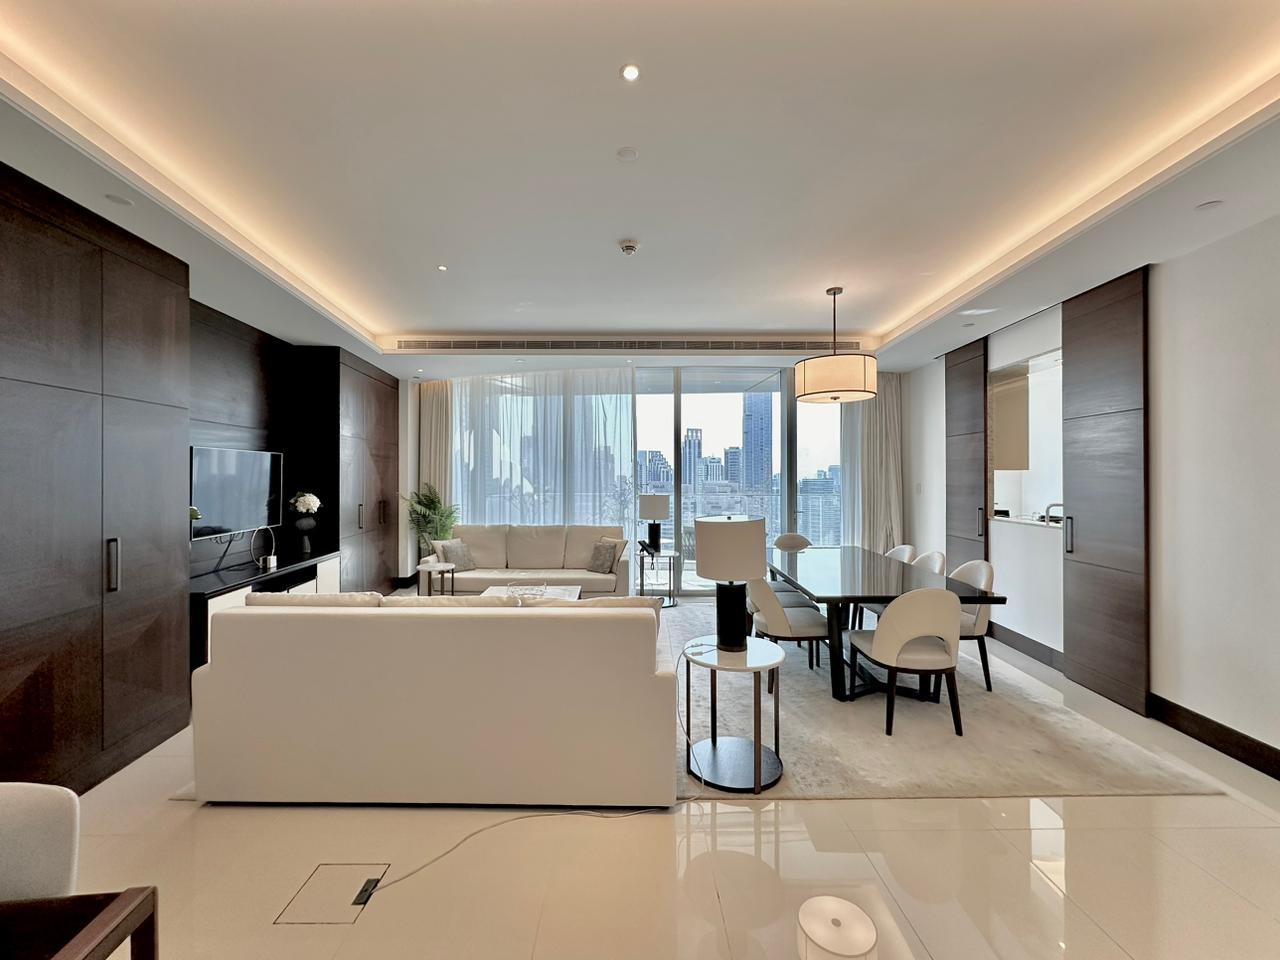 Vă propunem spre achiziție un apartament cu 4 camere situat central cu vedere la celebrul Burj Kalifa.